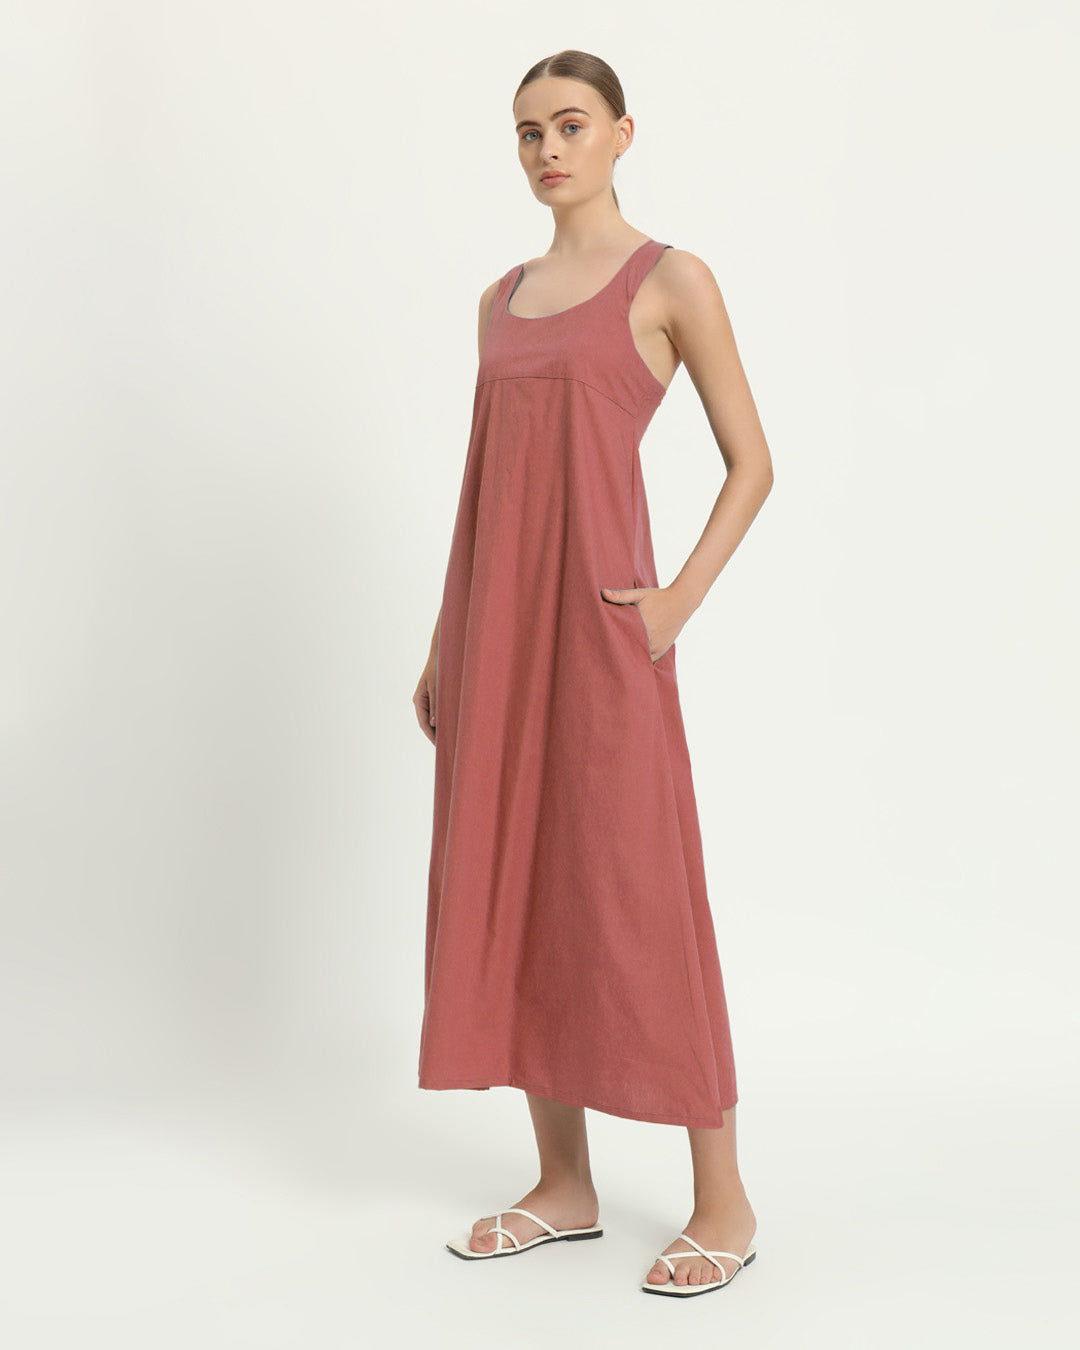 The Magdala Ivory Pink Cotton Dress